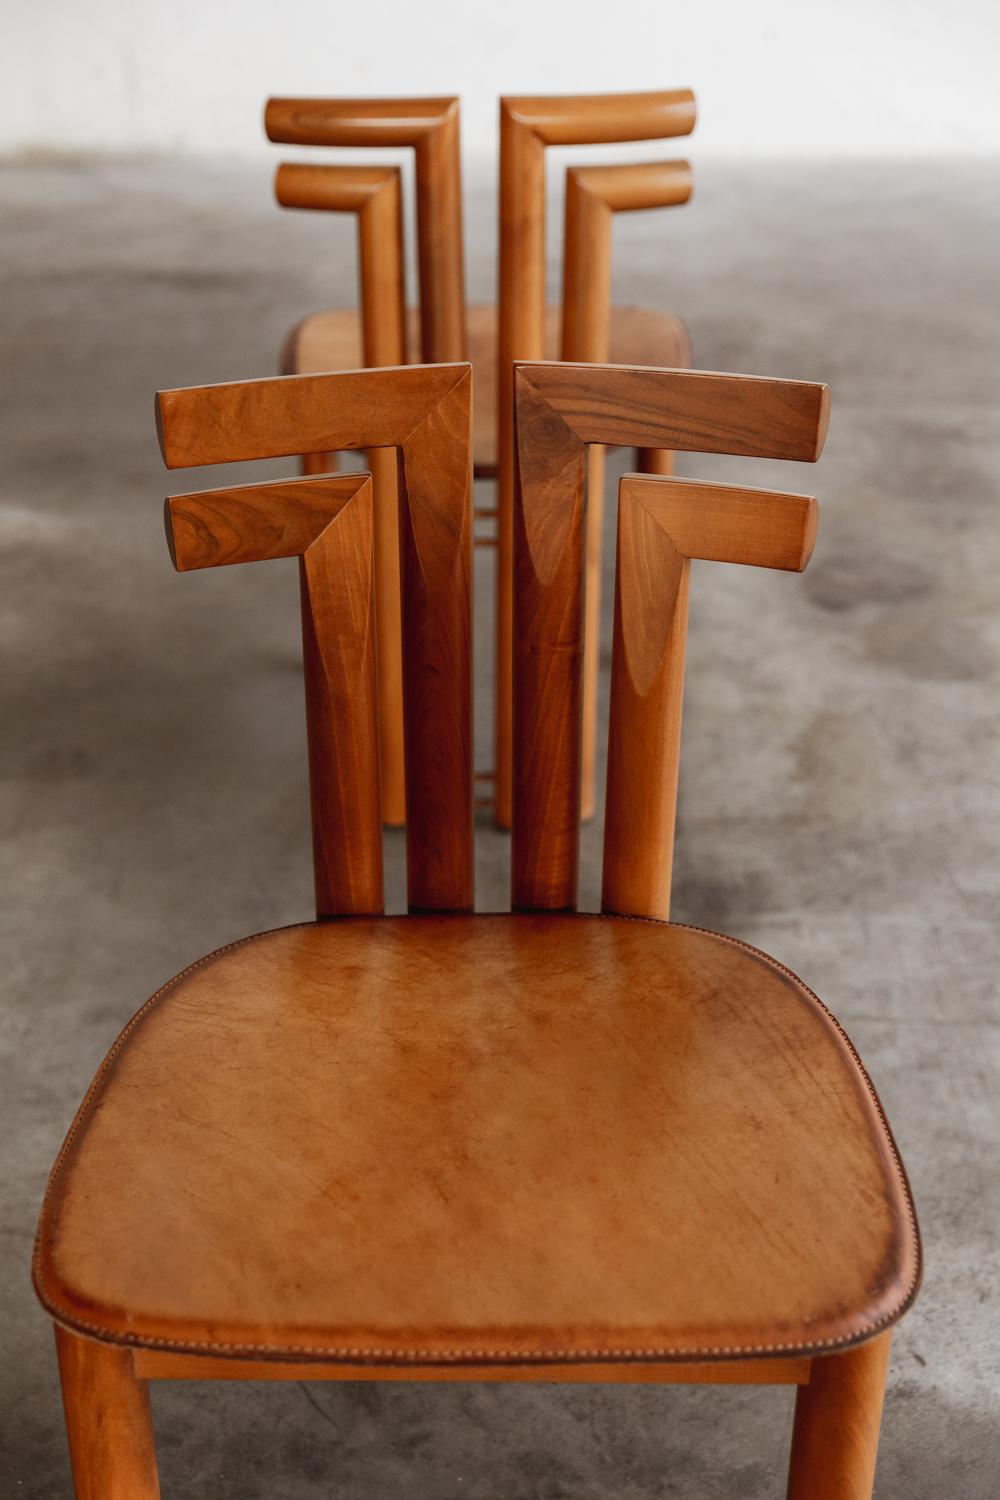 Mario Marenco “Sapporo” Dining Chairs for Mobil Girgi, 1970, set of 2 In Good Condition For Sale In Lonigo, Veneto